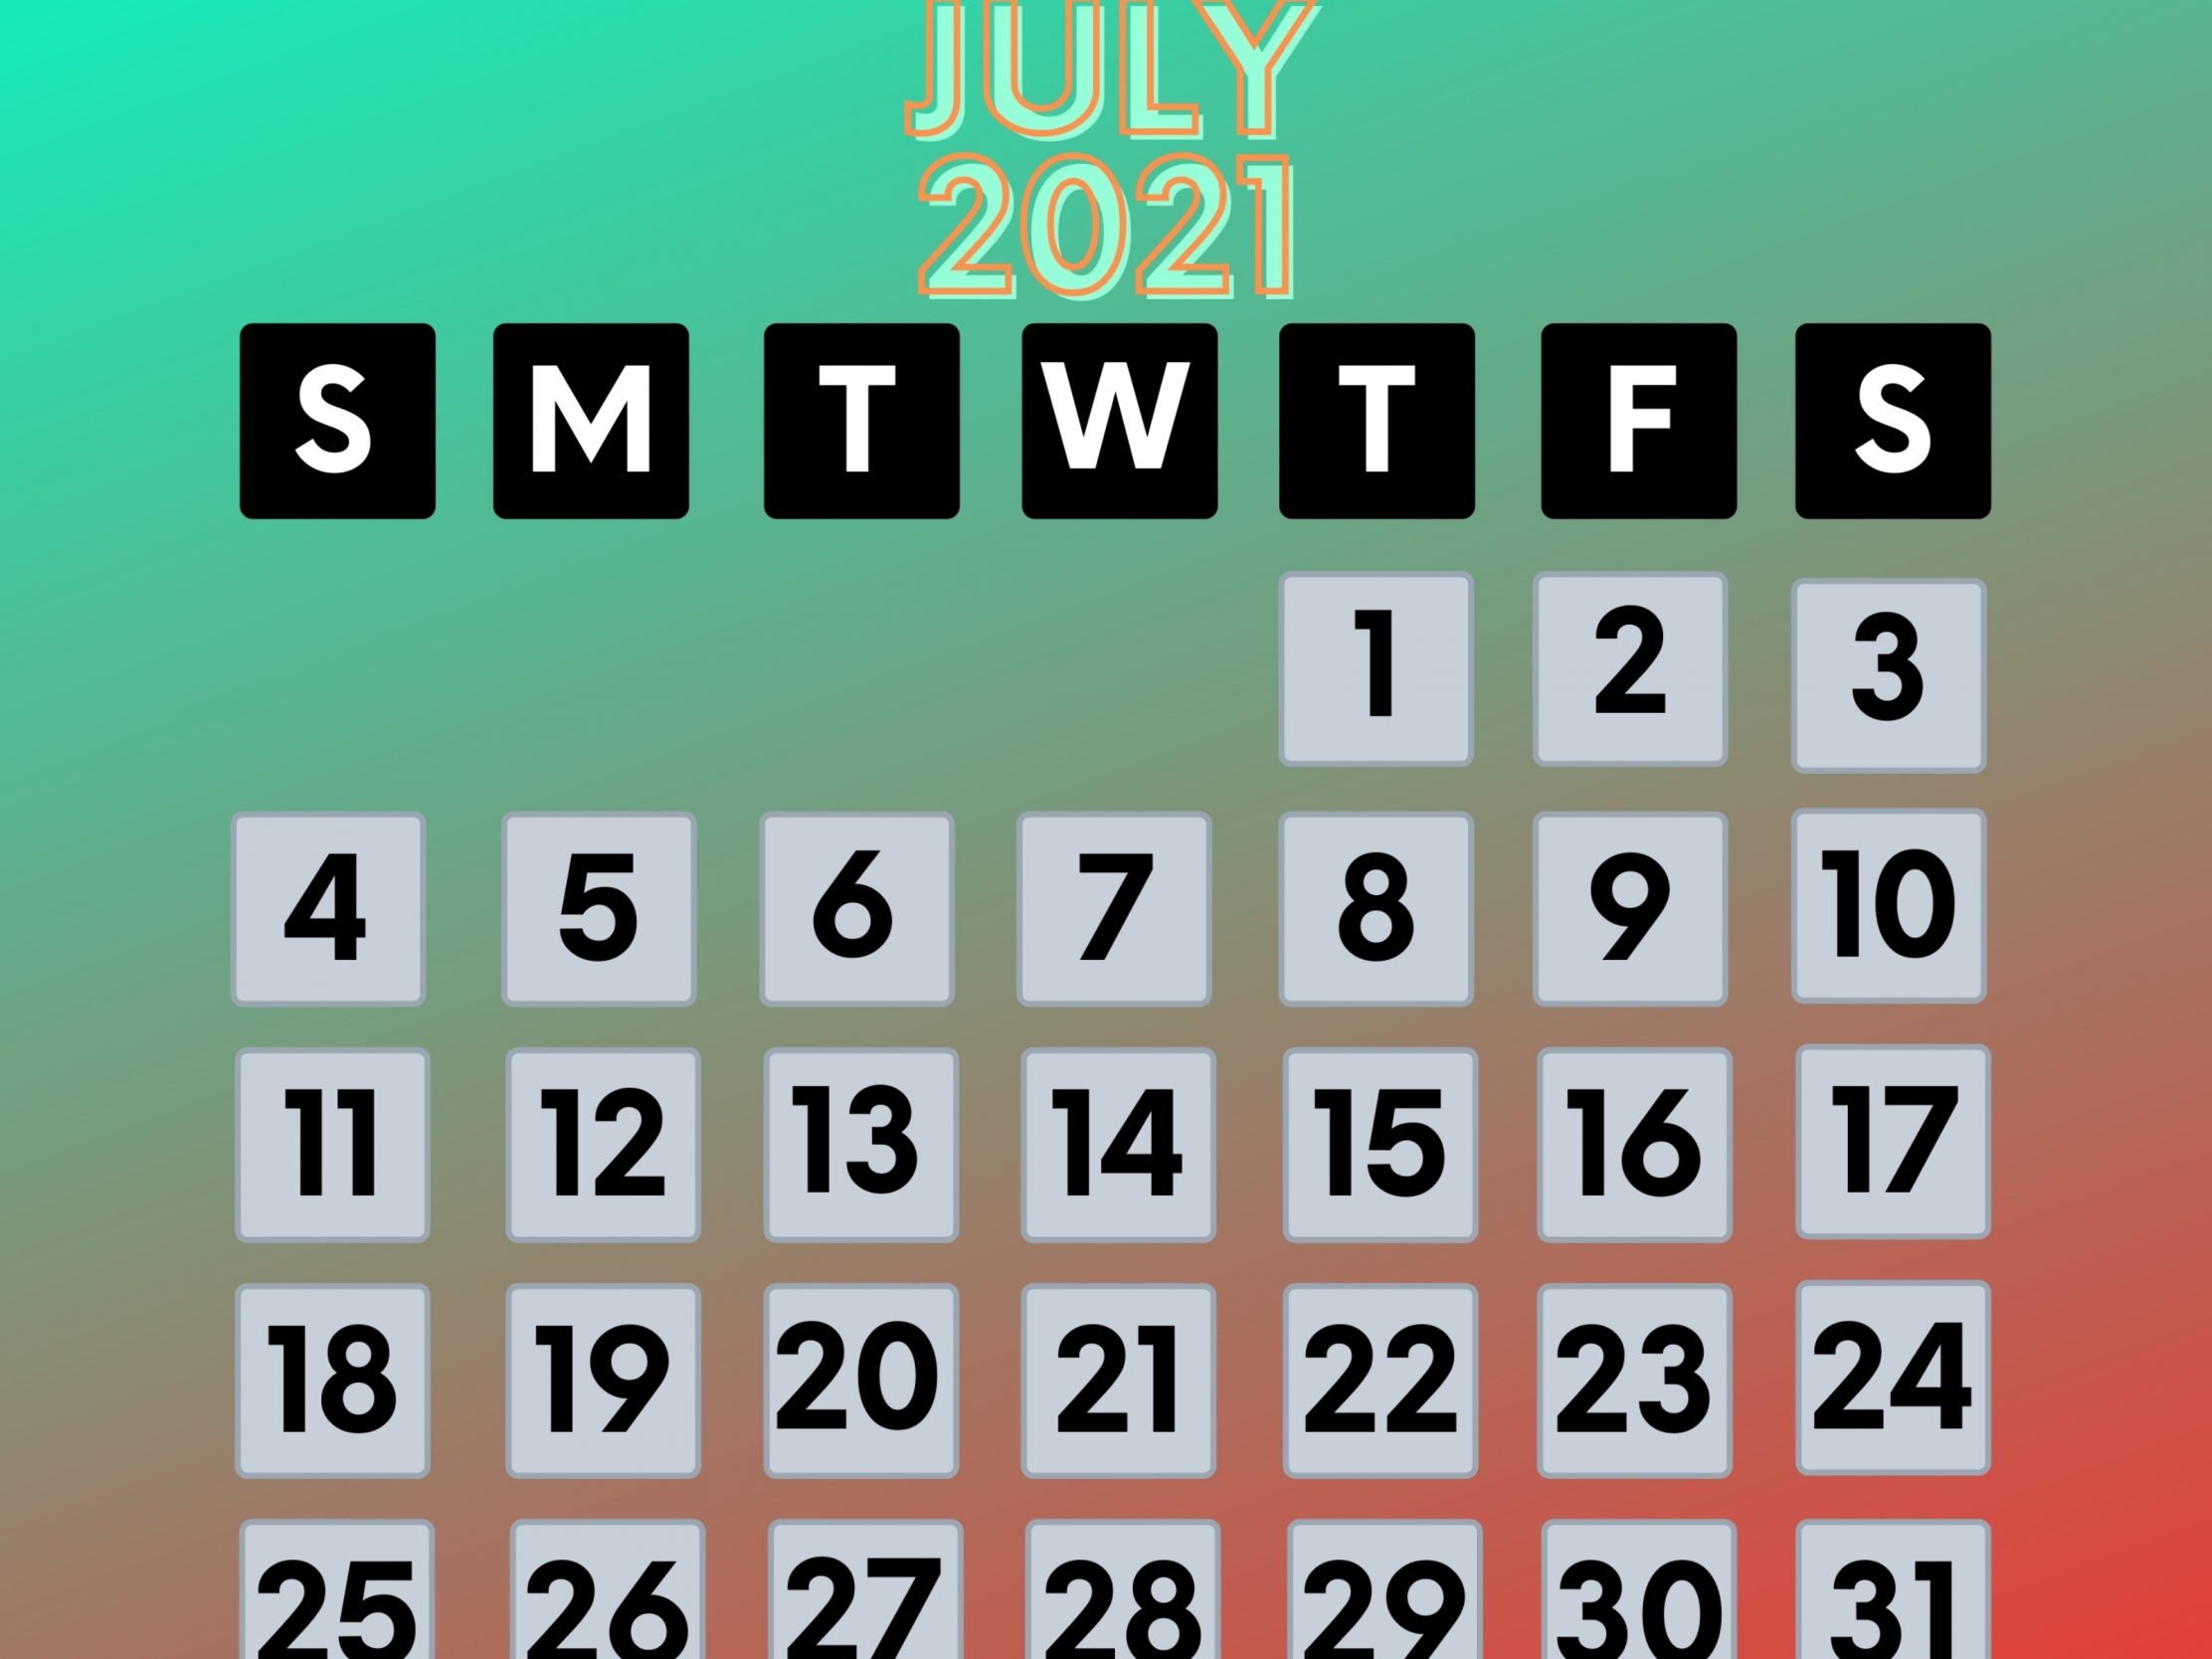 2224x1668 iPad Pro wallpapers July 2021 Calendar iPad Wallpaper 2224x1668 pixels resolution